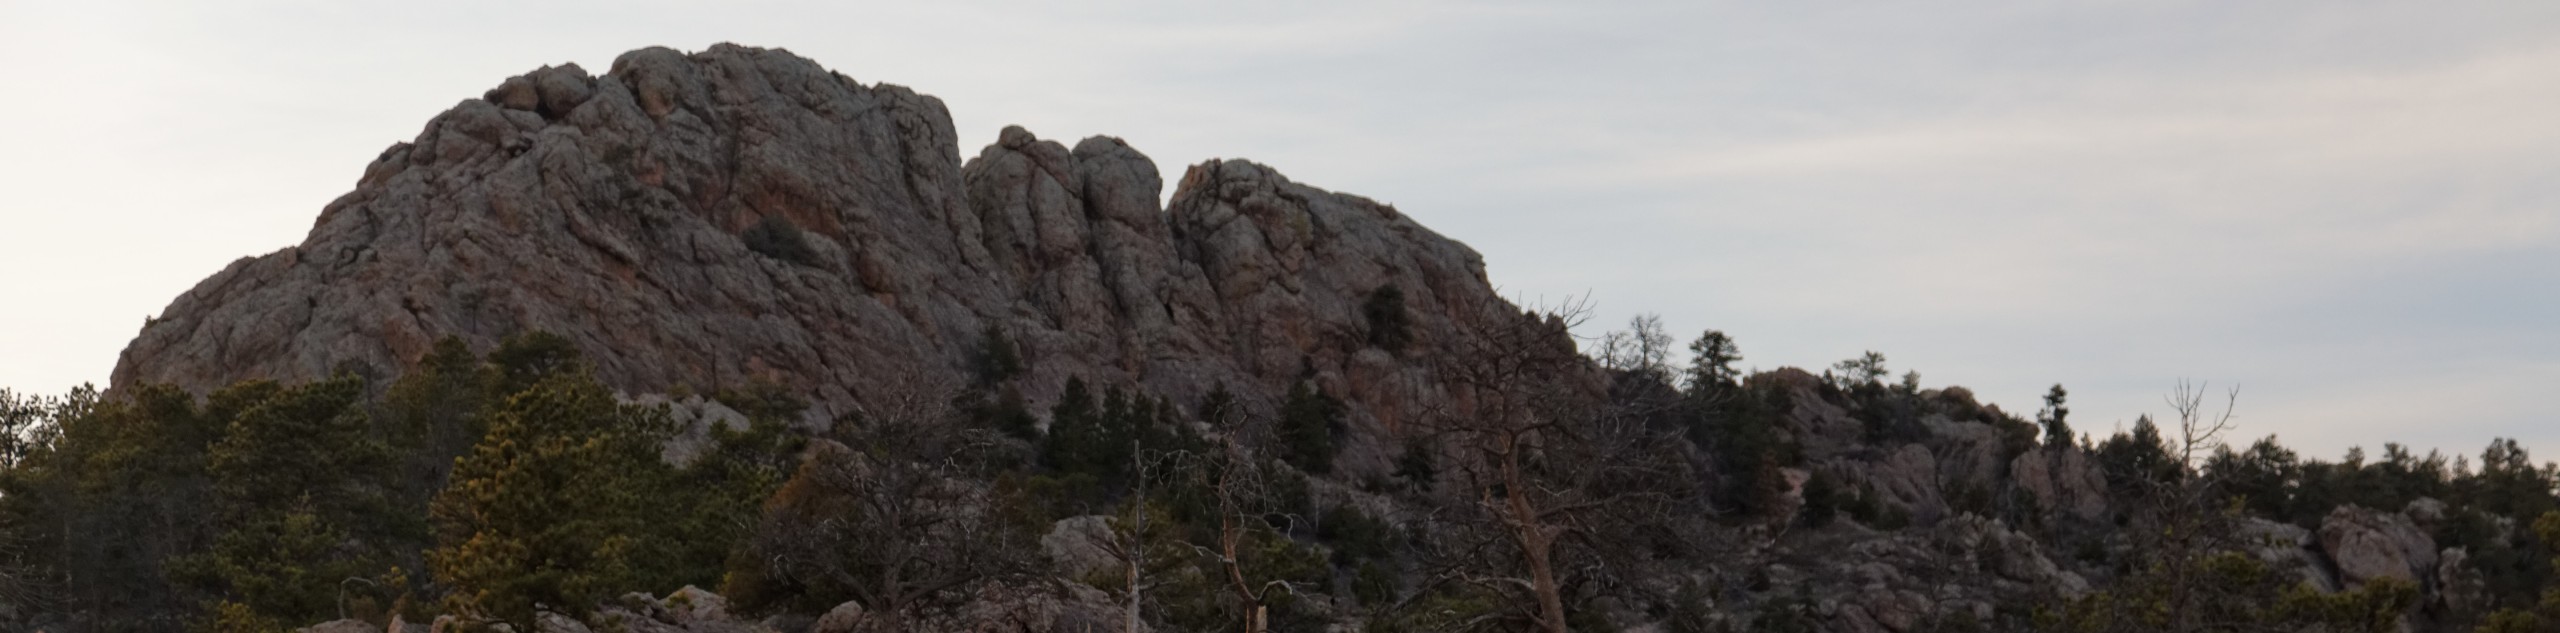 Horsetooth Rock via Wathan Trail